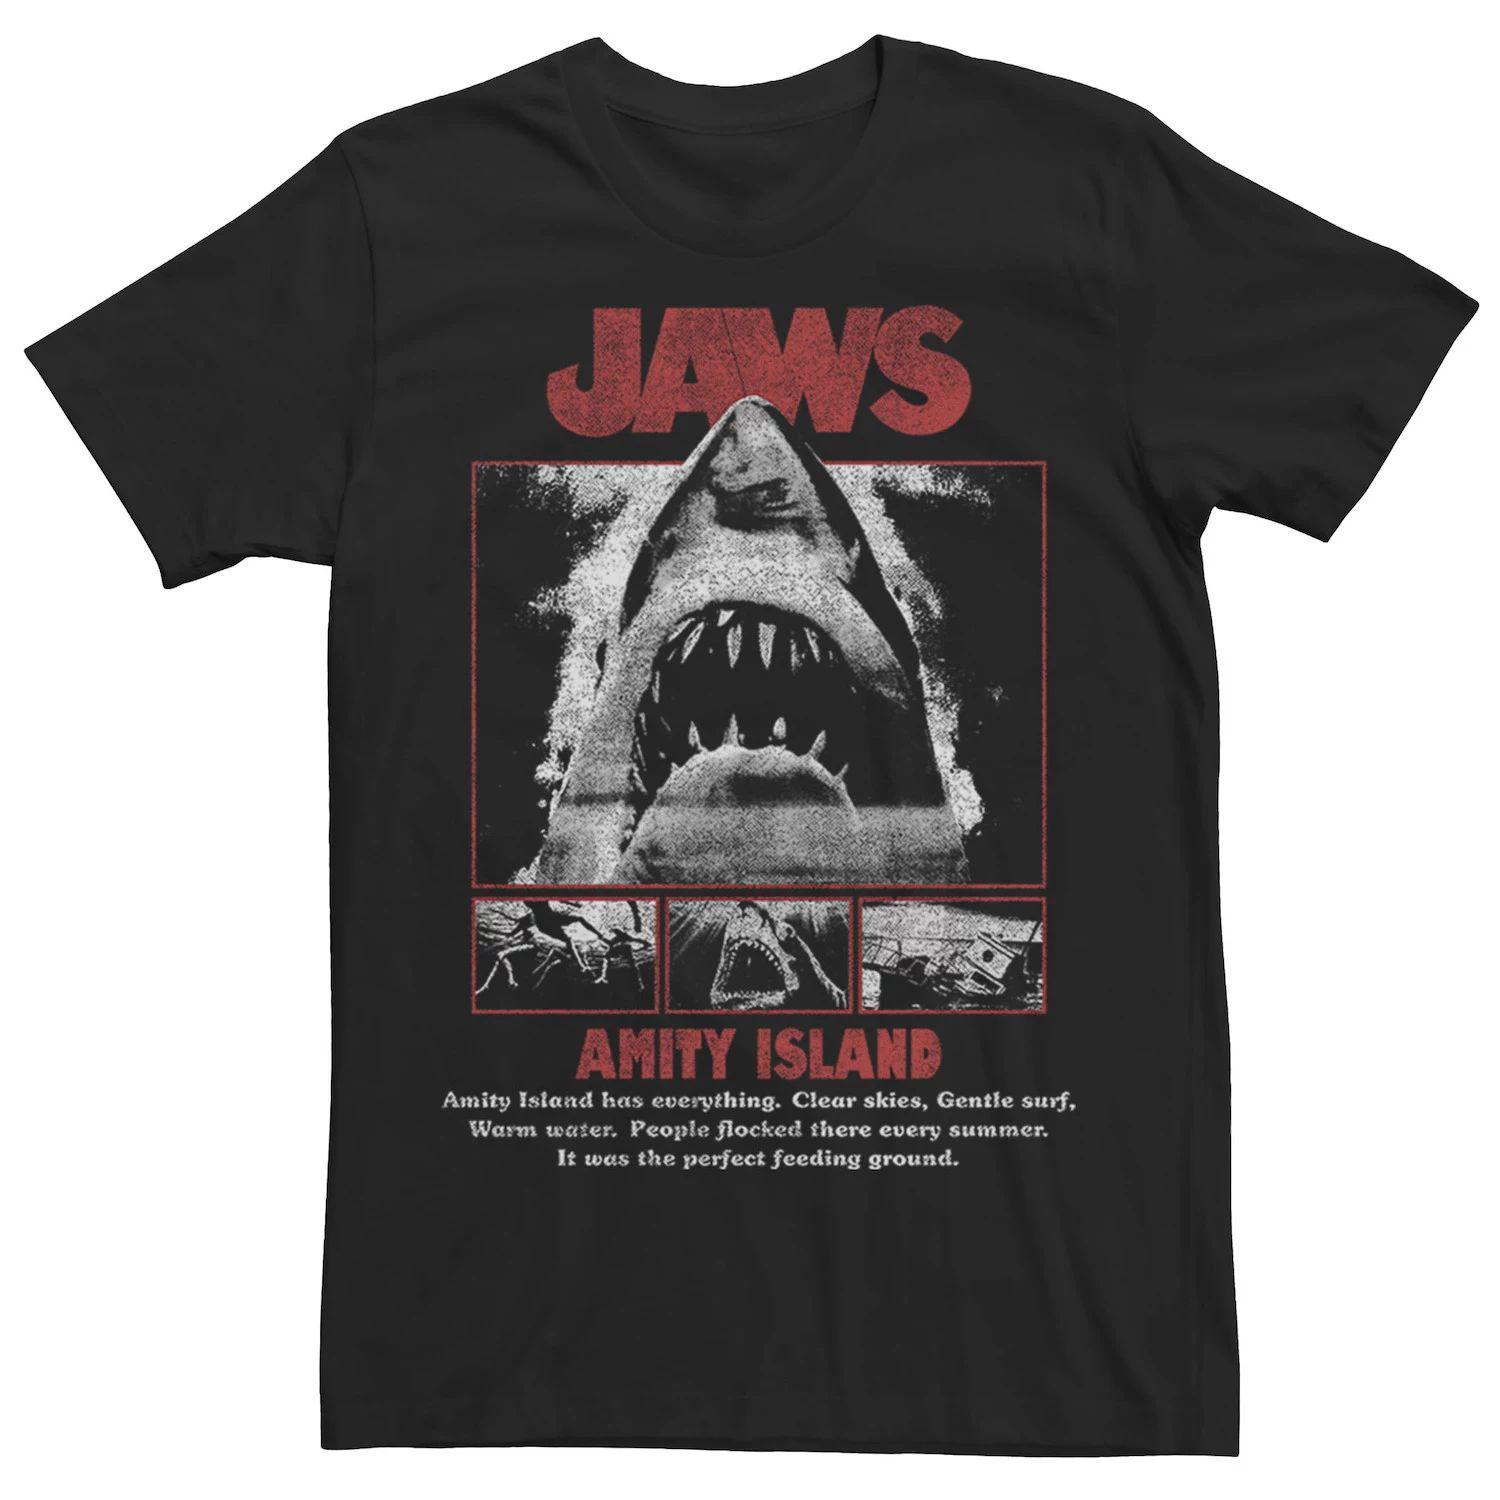 Мужская футболка Jaws Movie Pop Poster Licensed Character jaws classic original movie poster retro 70 s vintage graphic t shirt uni726